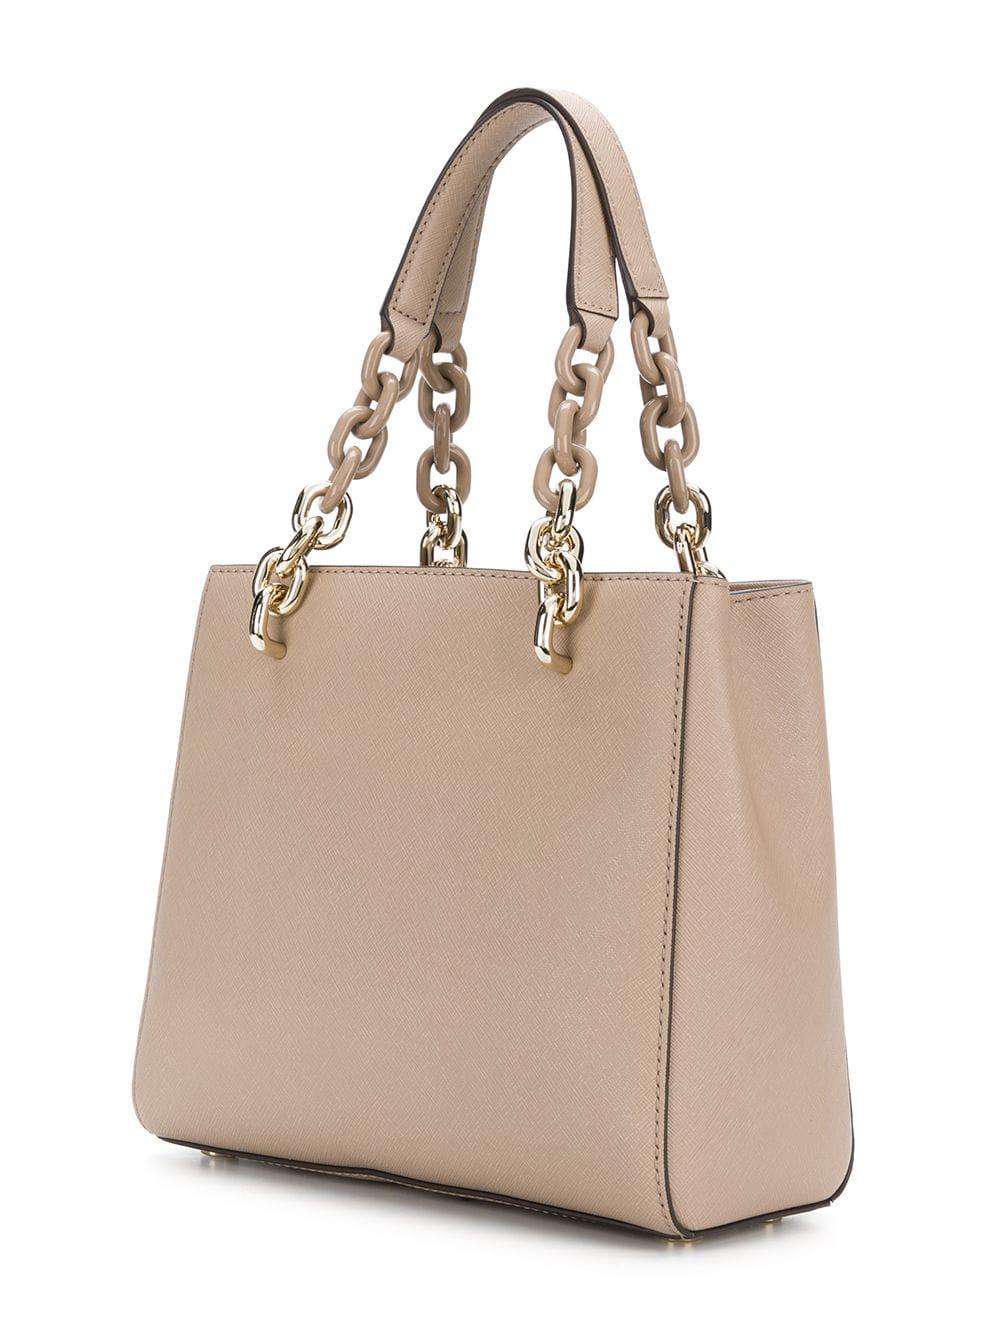 Michael Kors Handbag With Chain Strap Hot Sale, SAVE 44% - leynir.is